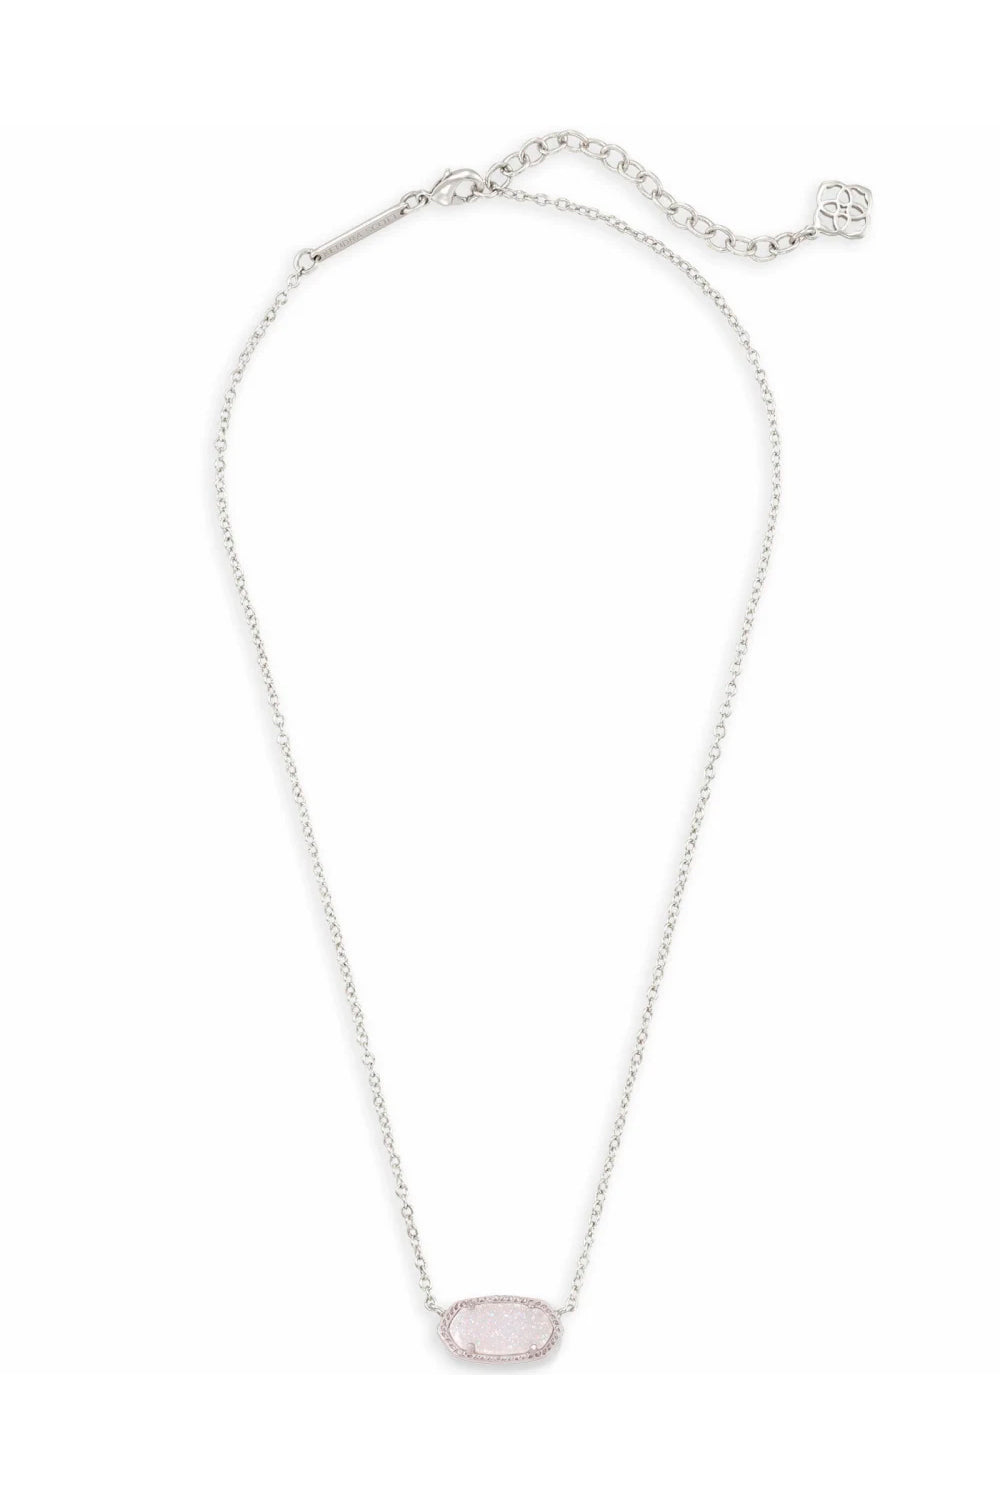 Baroque Elisa Vintage Silver Pendant Necklace in Variegated Dark Teal  Magnesite | Kendra Scott